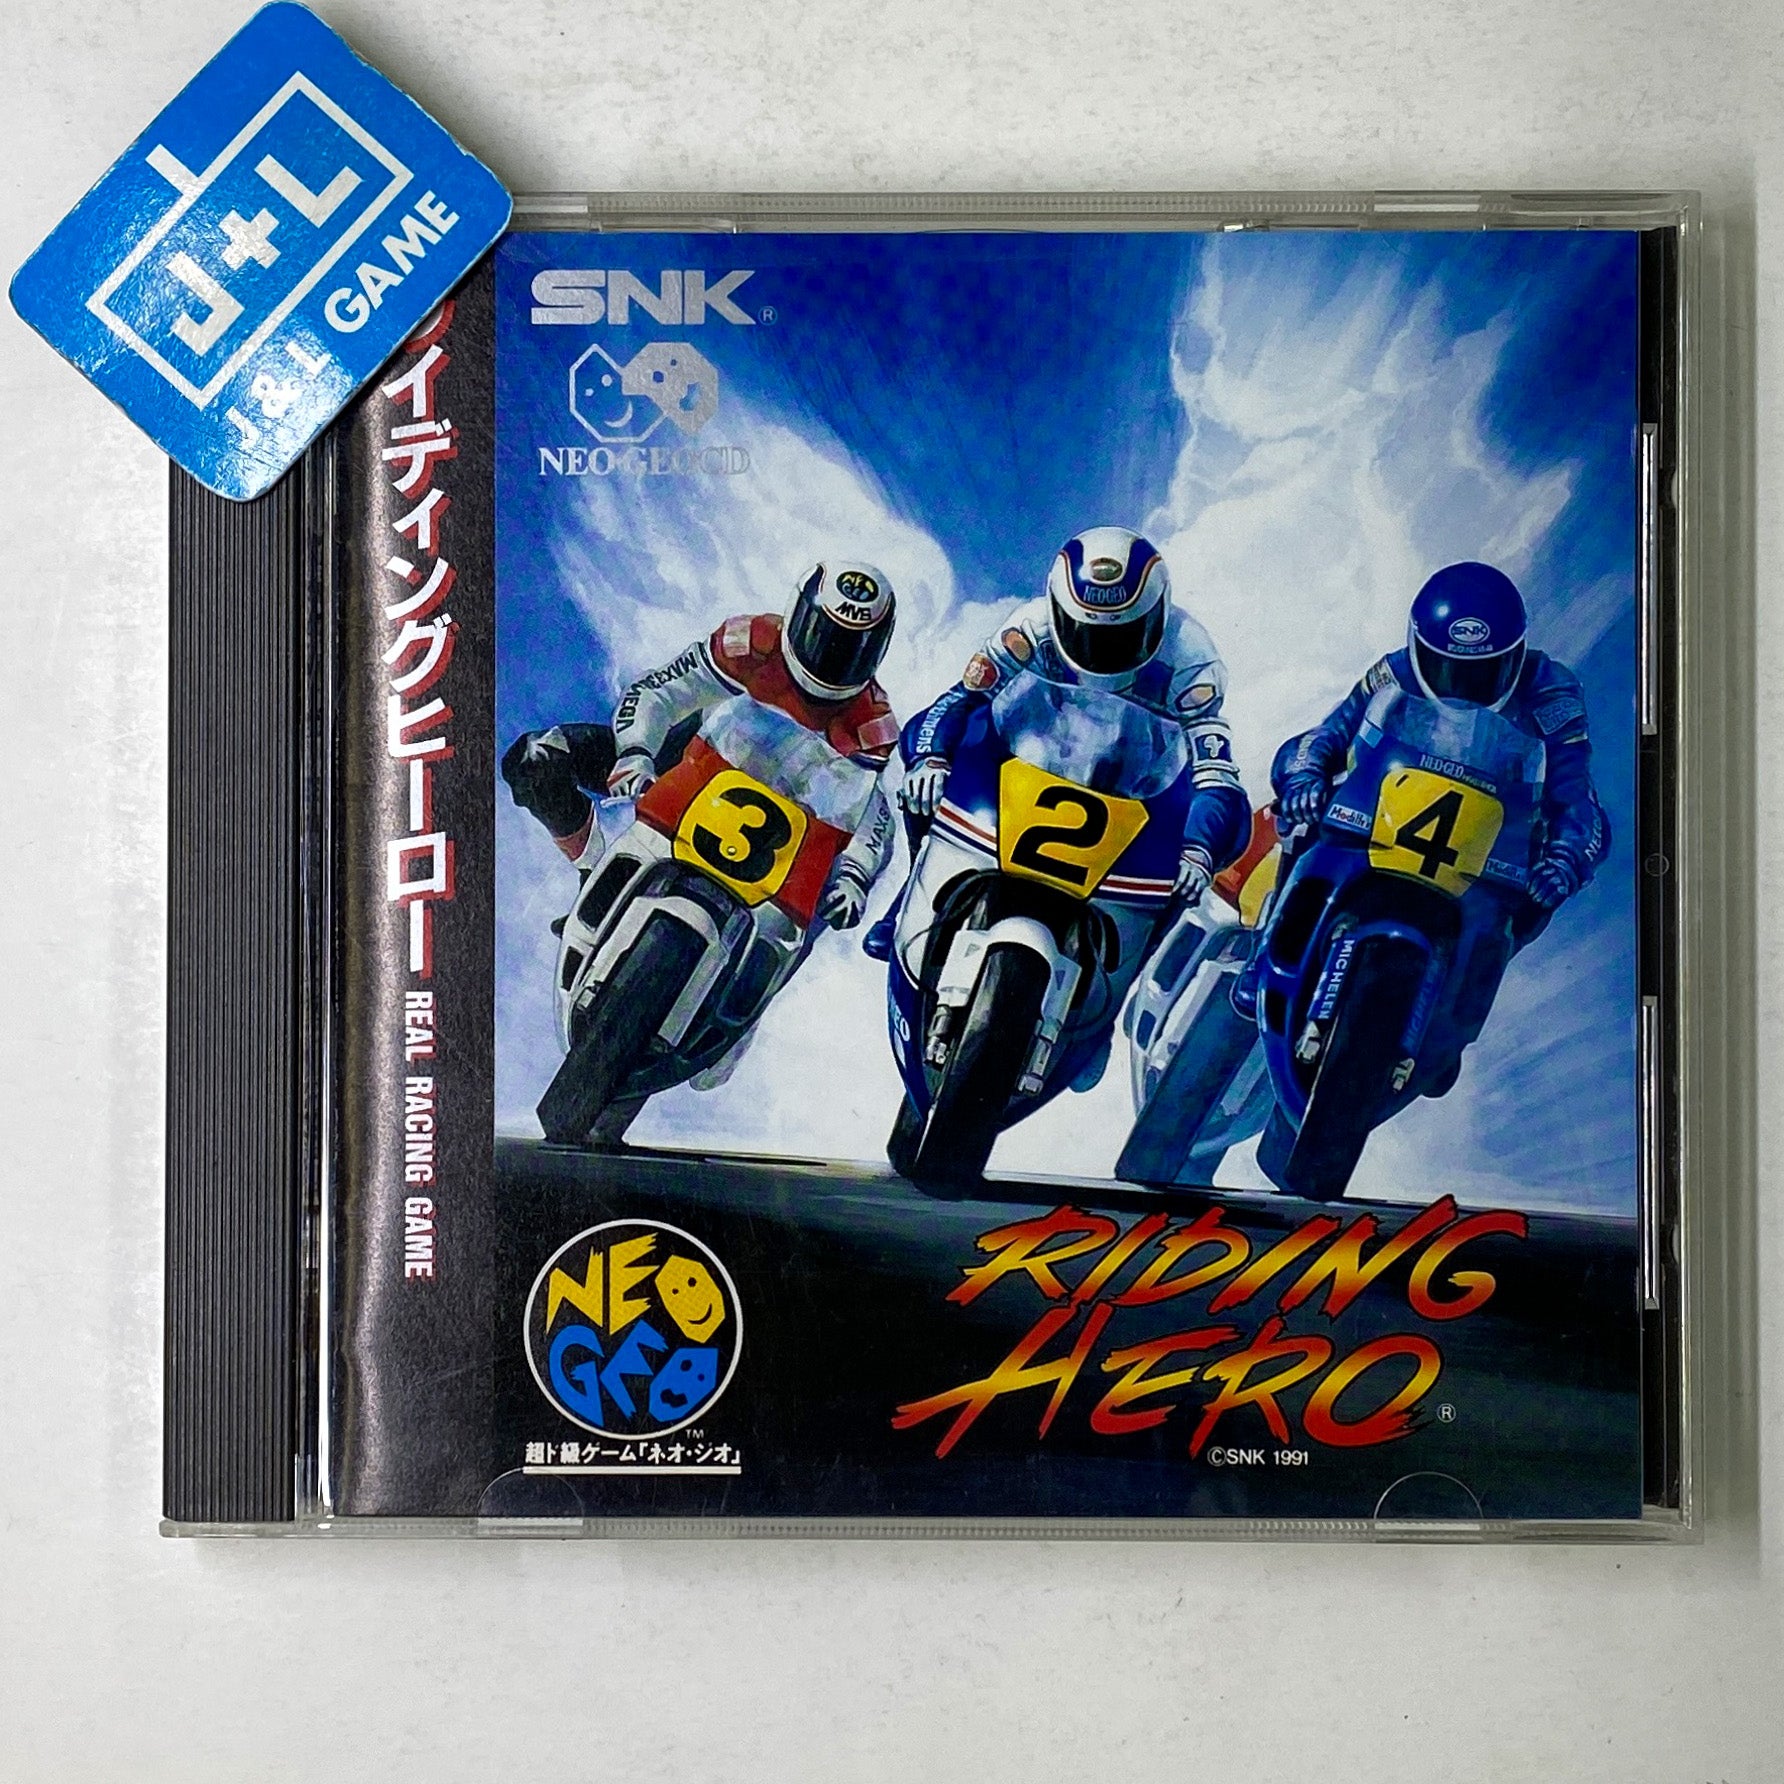 Neo Geo ロムカセット ライディングヒーロー winstudio.com.sg